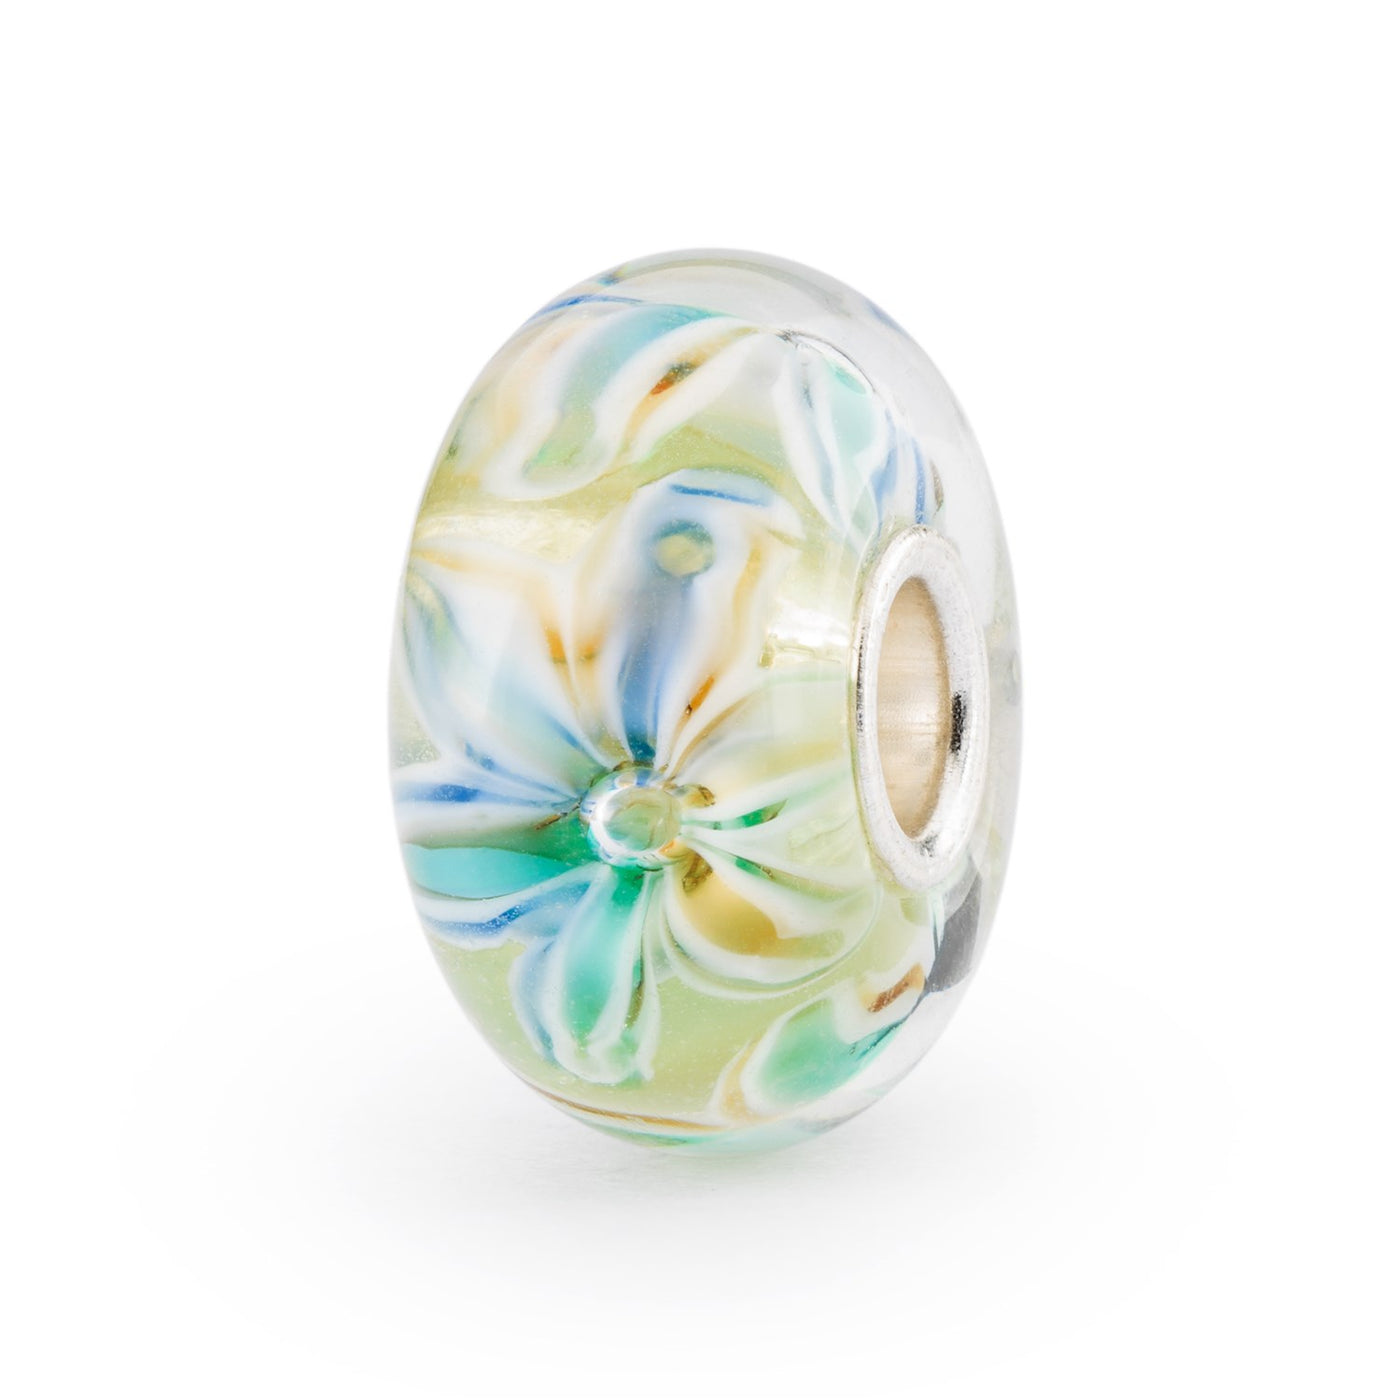 Forbløffende glaskugle med et fantasifuldt blomsterdesign i grønne, blå, turkis og gule farver.